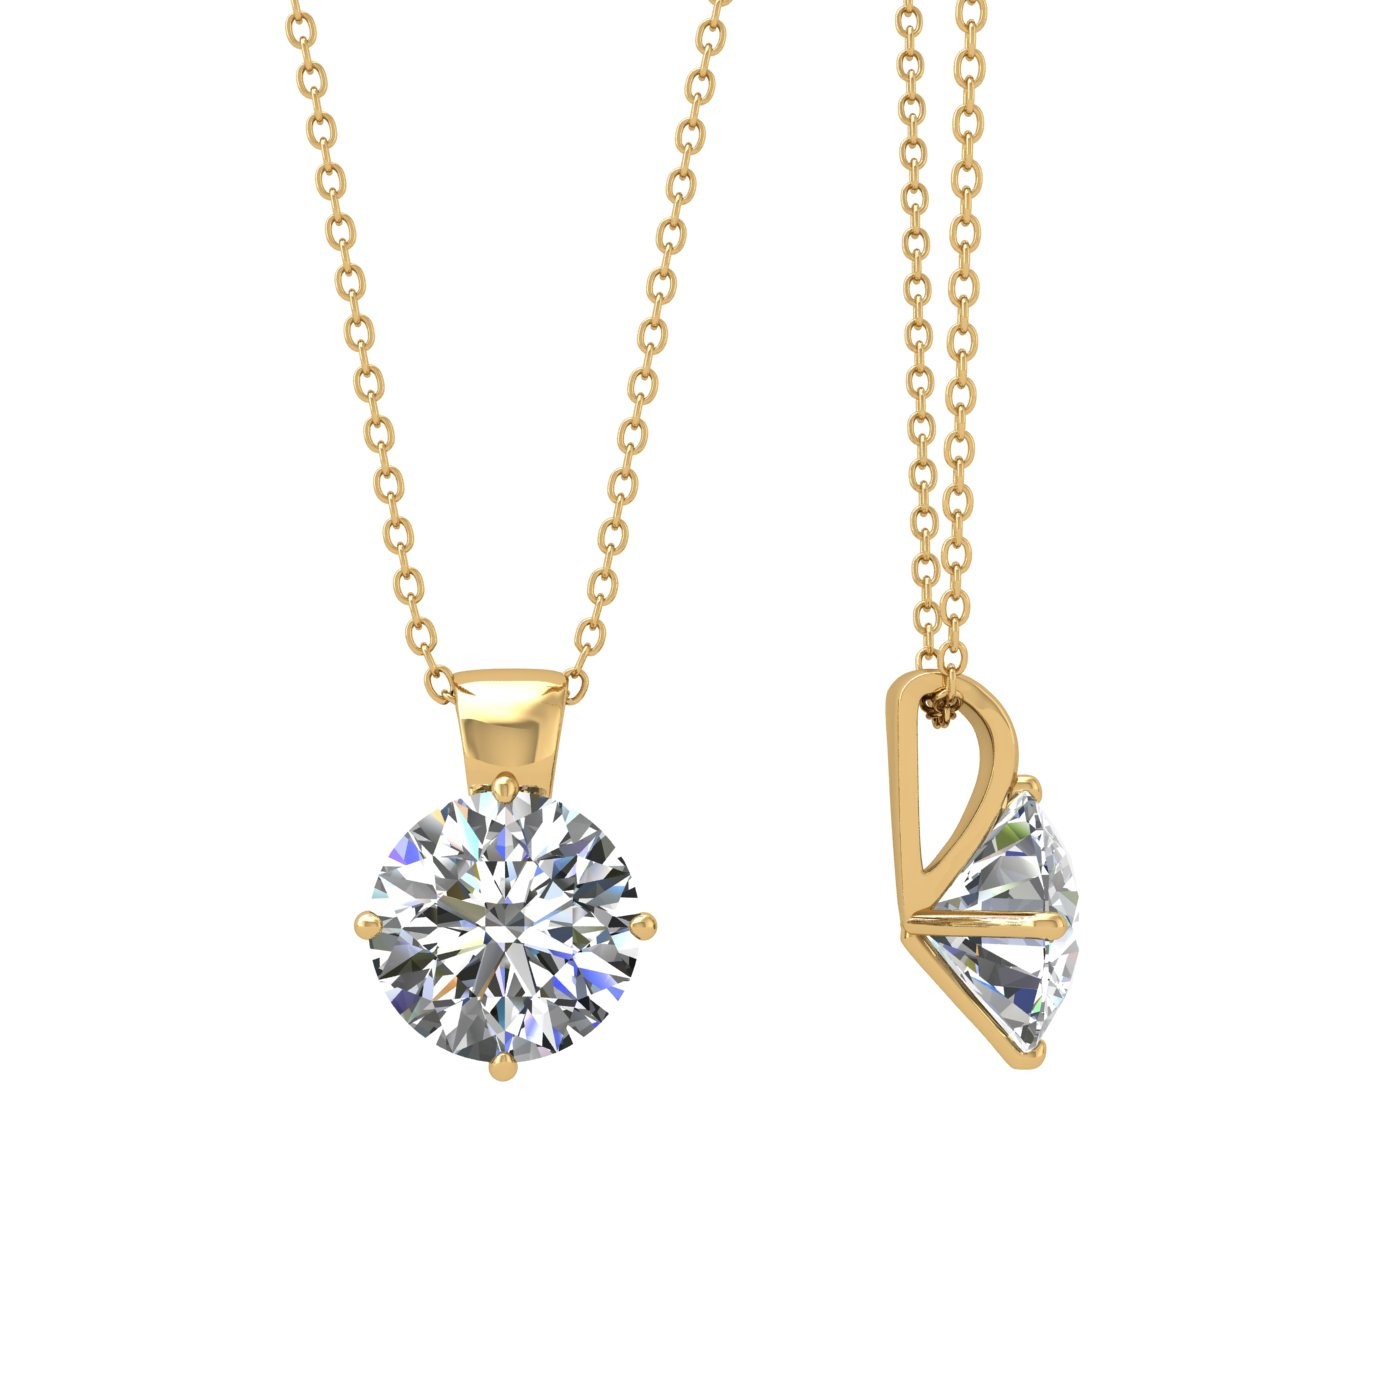 18k yellow gold 1 ct 4 prongs round shape diamond pendant